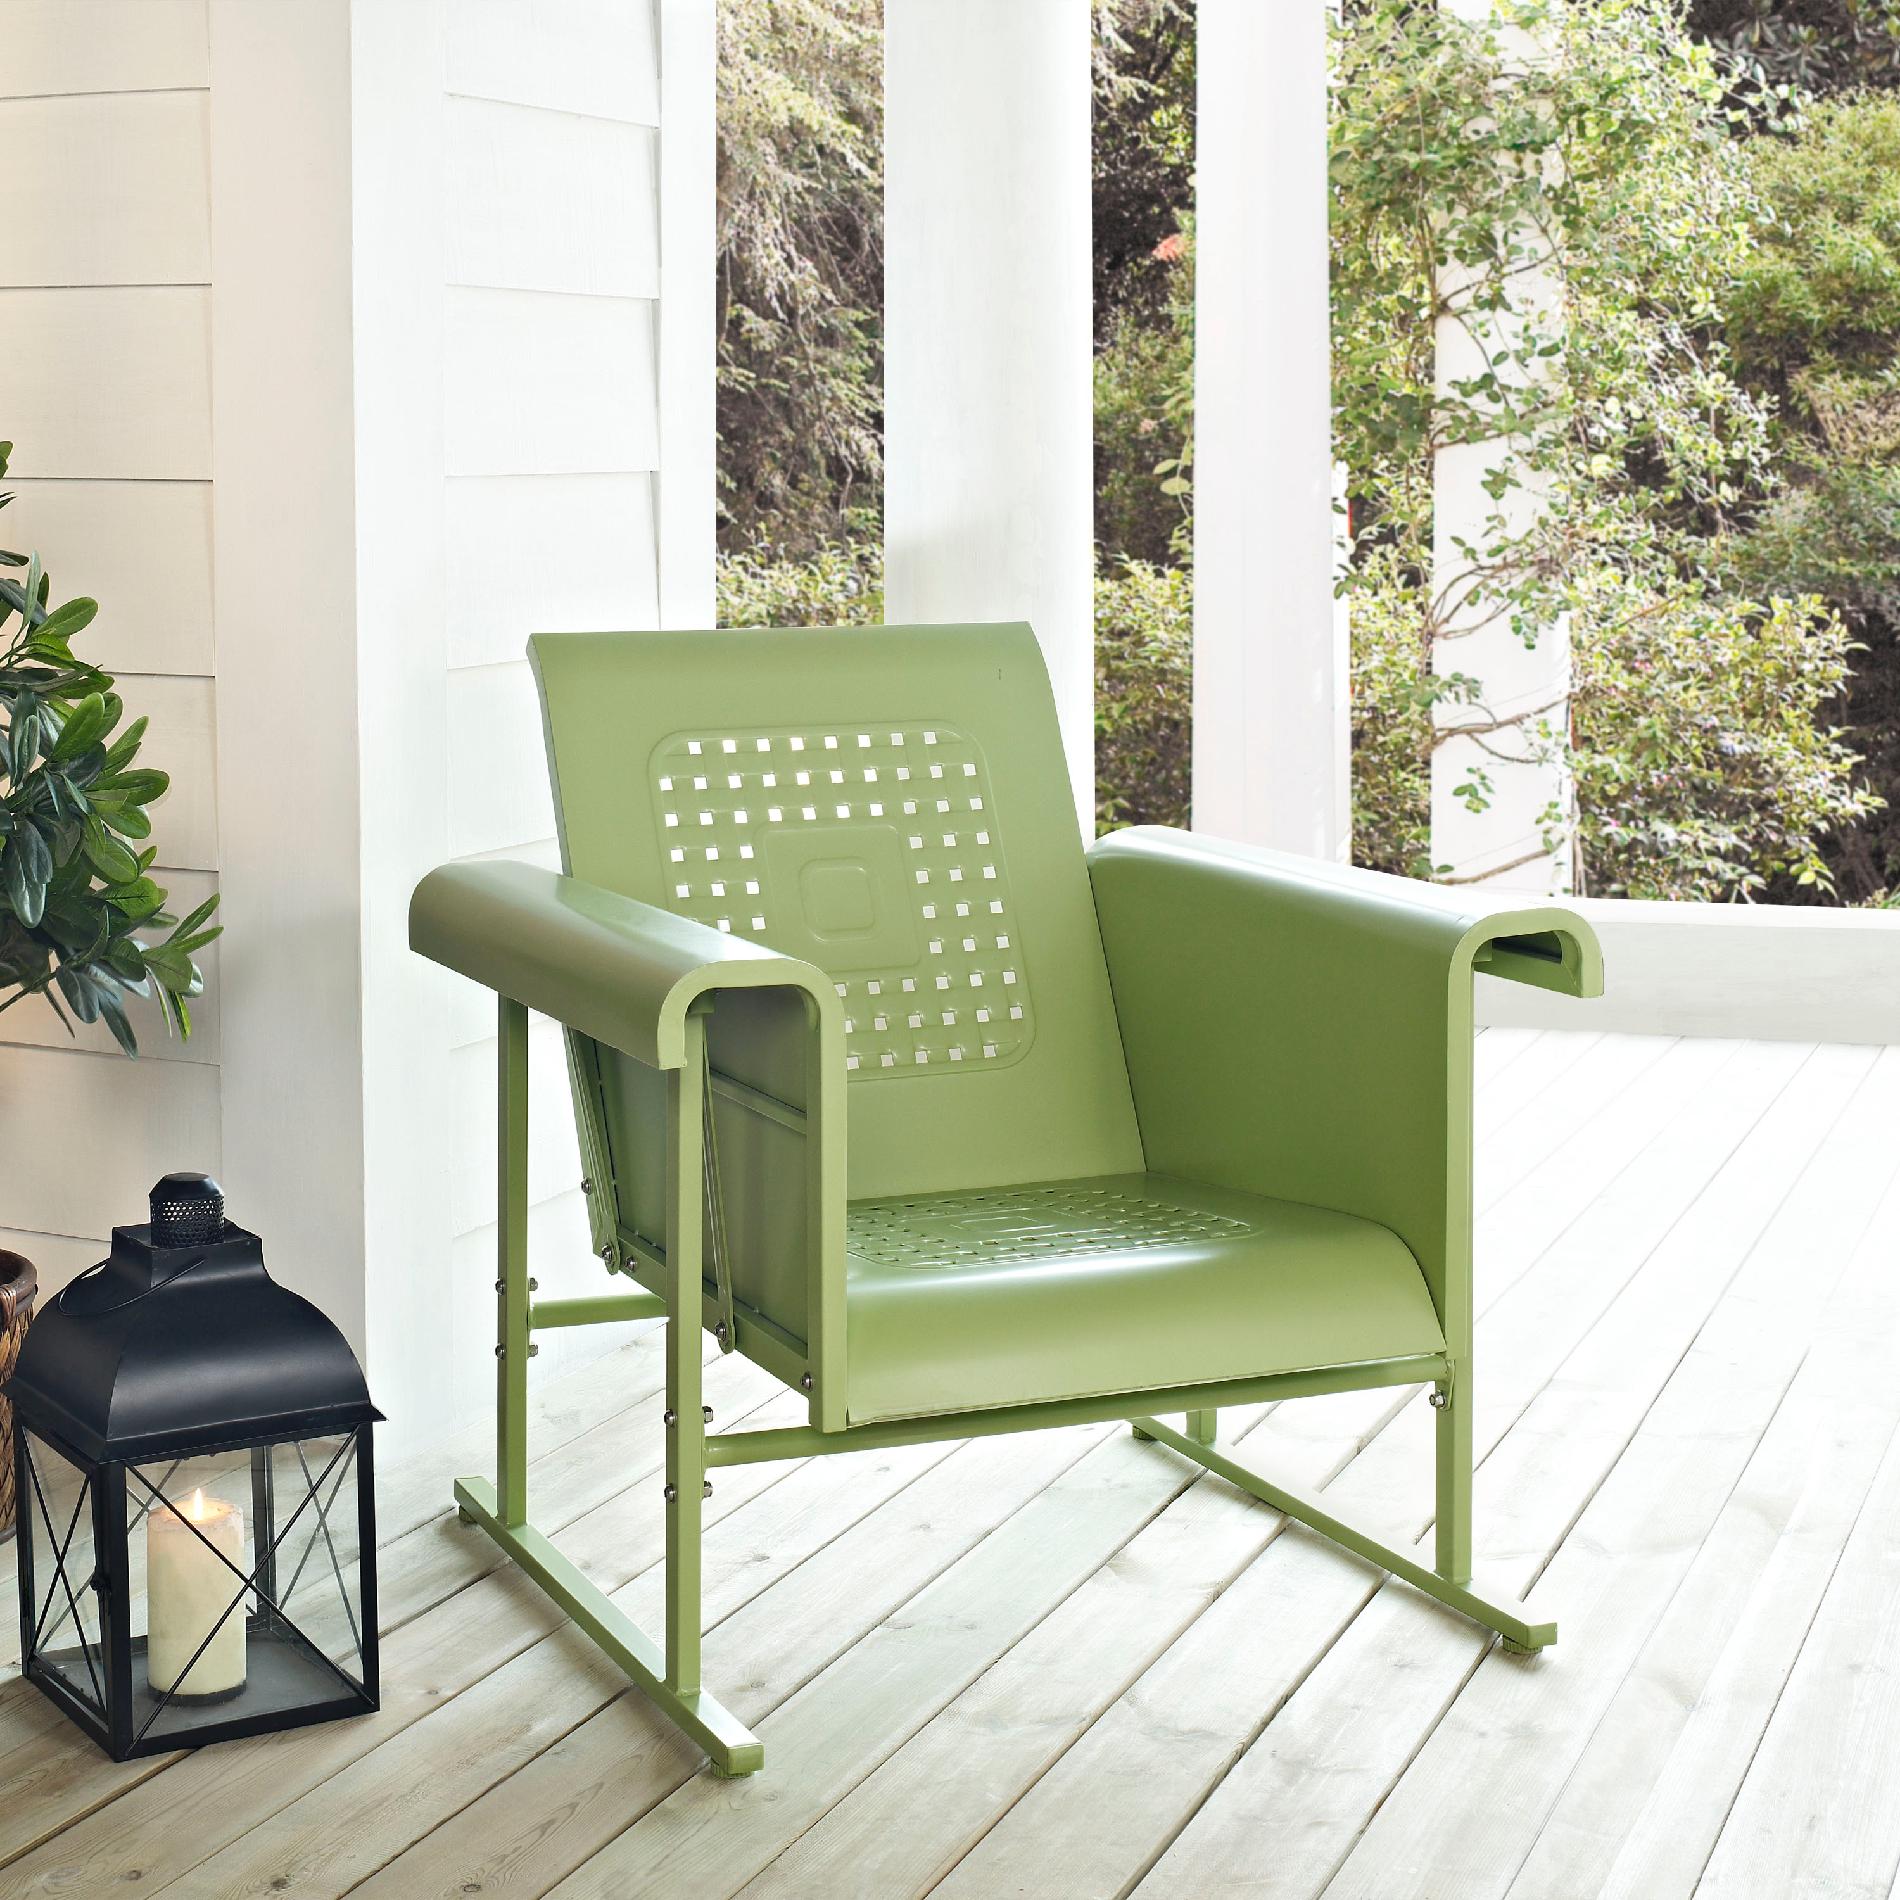 Crosley Outdoor Veranda Single Glider Chair in Assorted colors